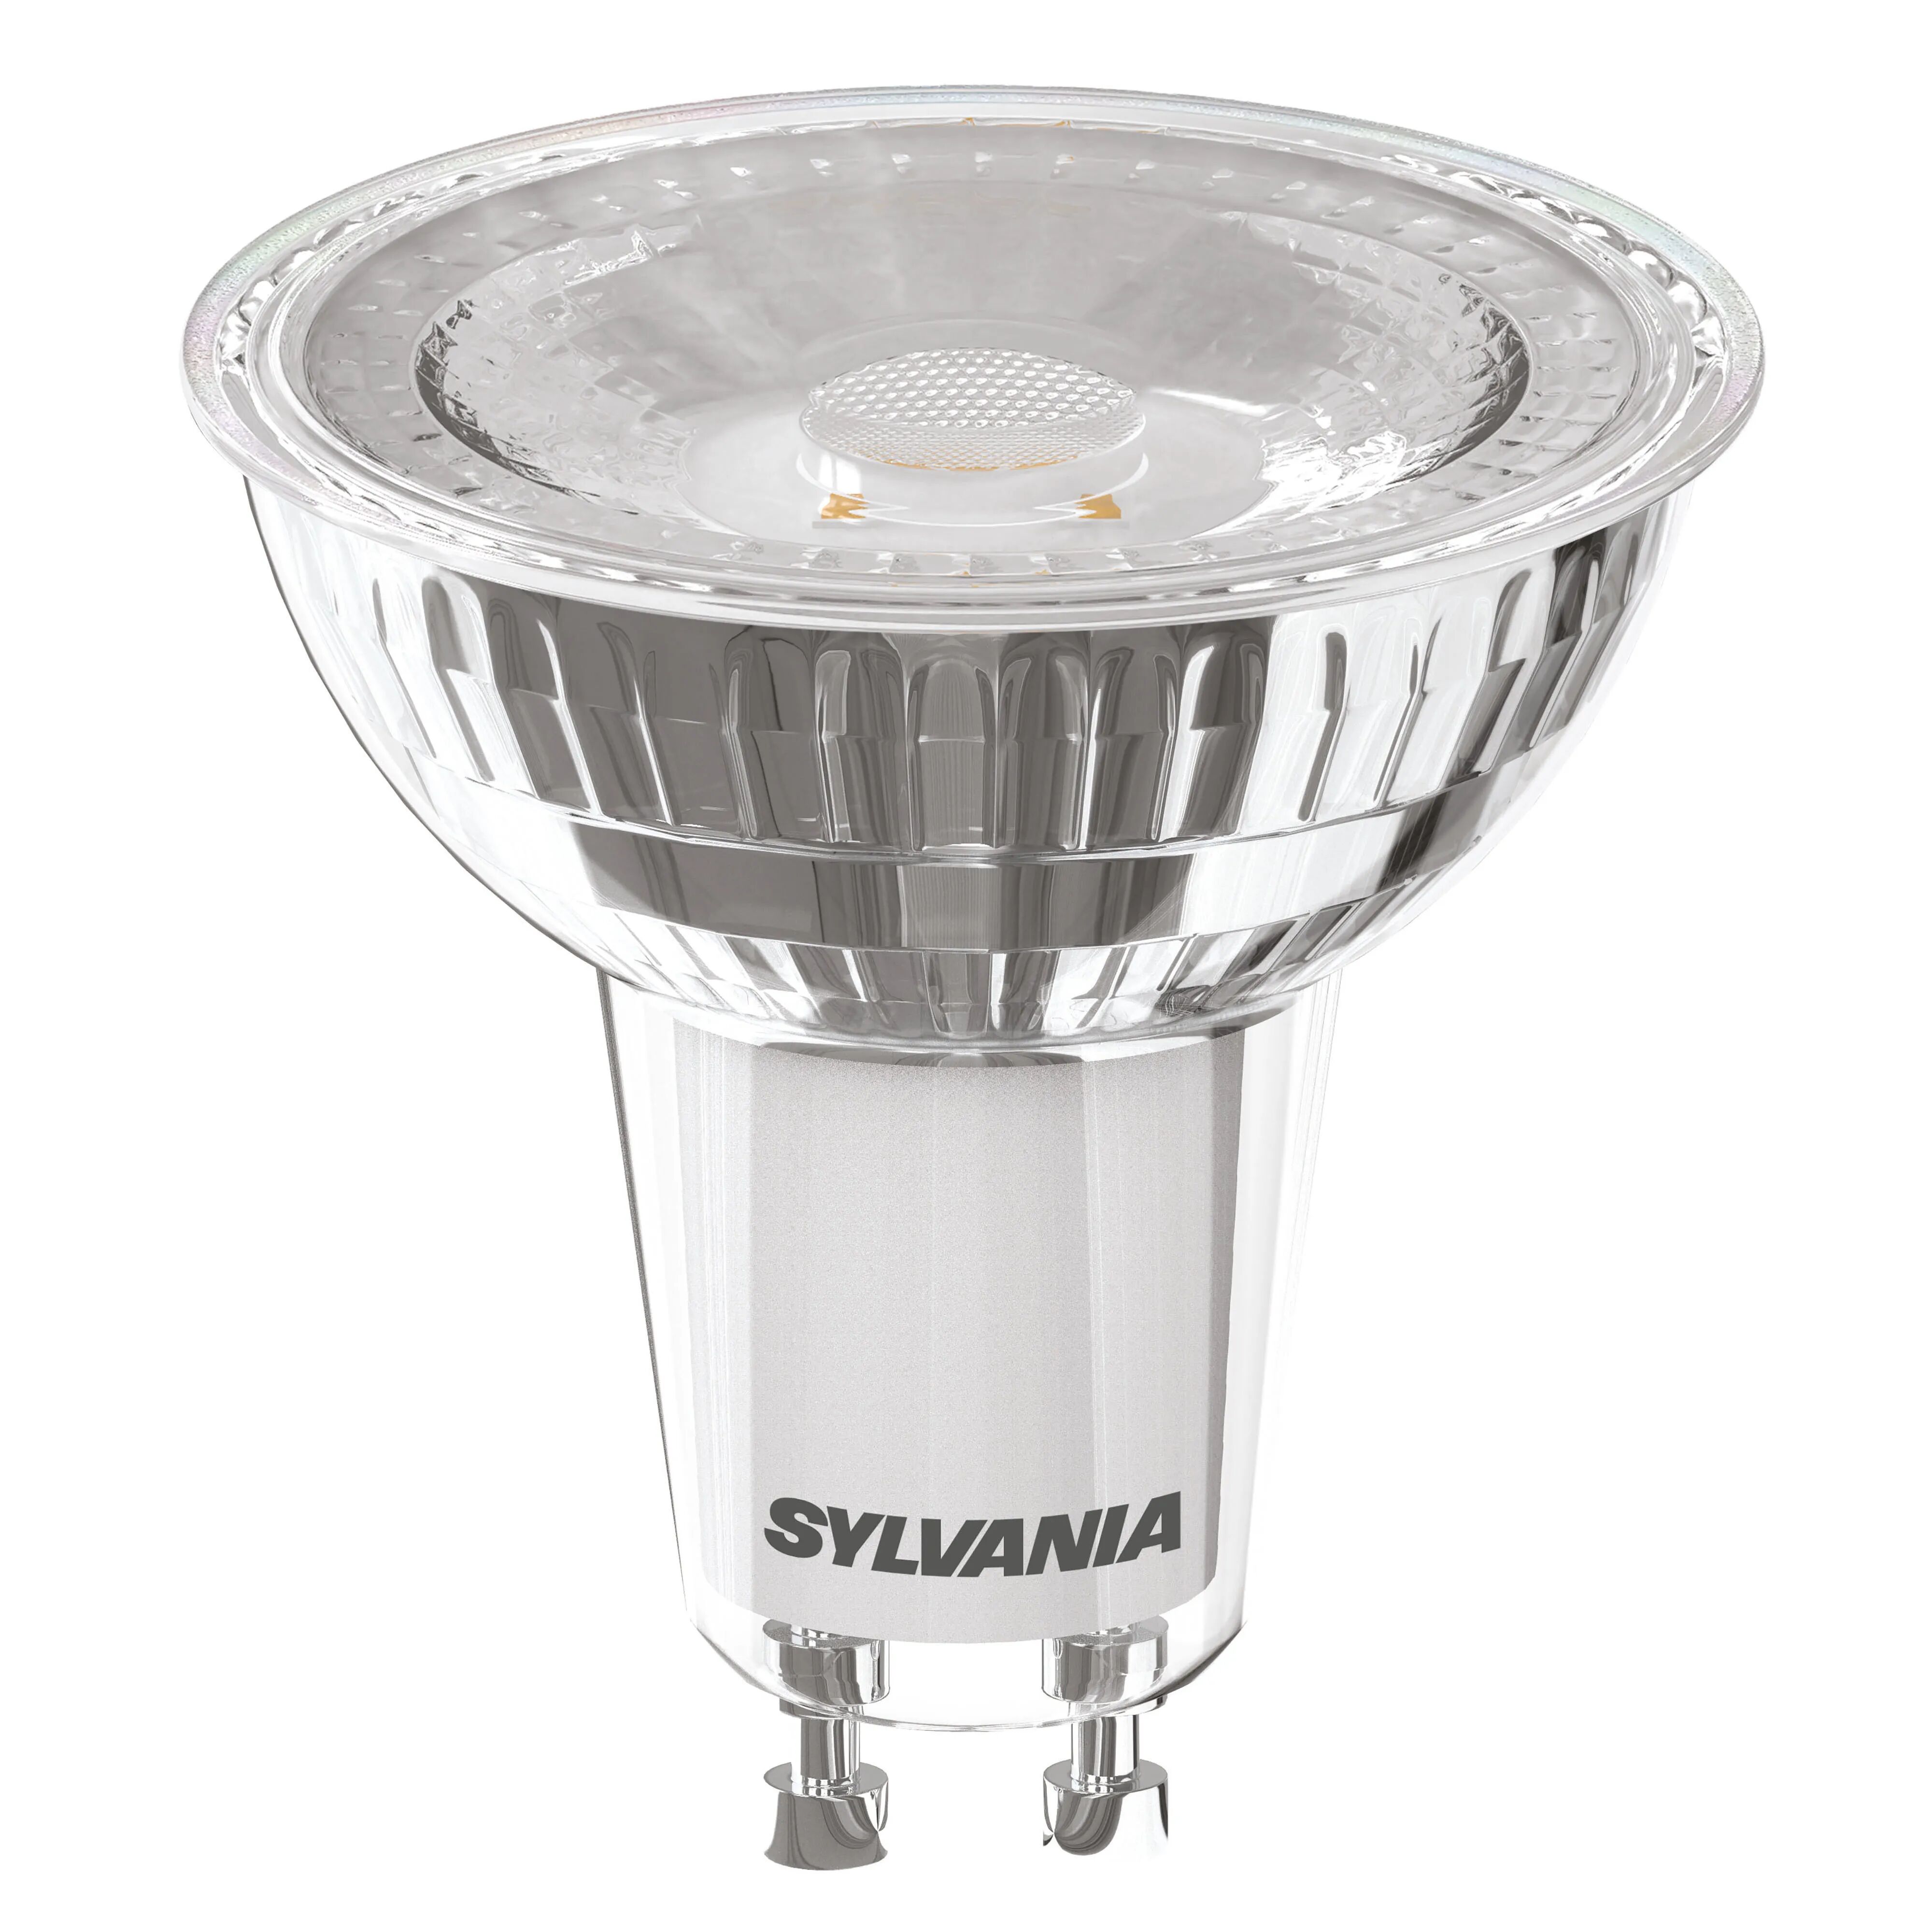 Feilo_sylvania LAMPADINA SYLVANIA LED GU10 6W=75W 550 lumen 3000K LUCE CALDA Ø 50x54 mm DIMMERABILE